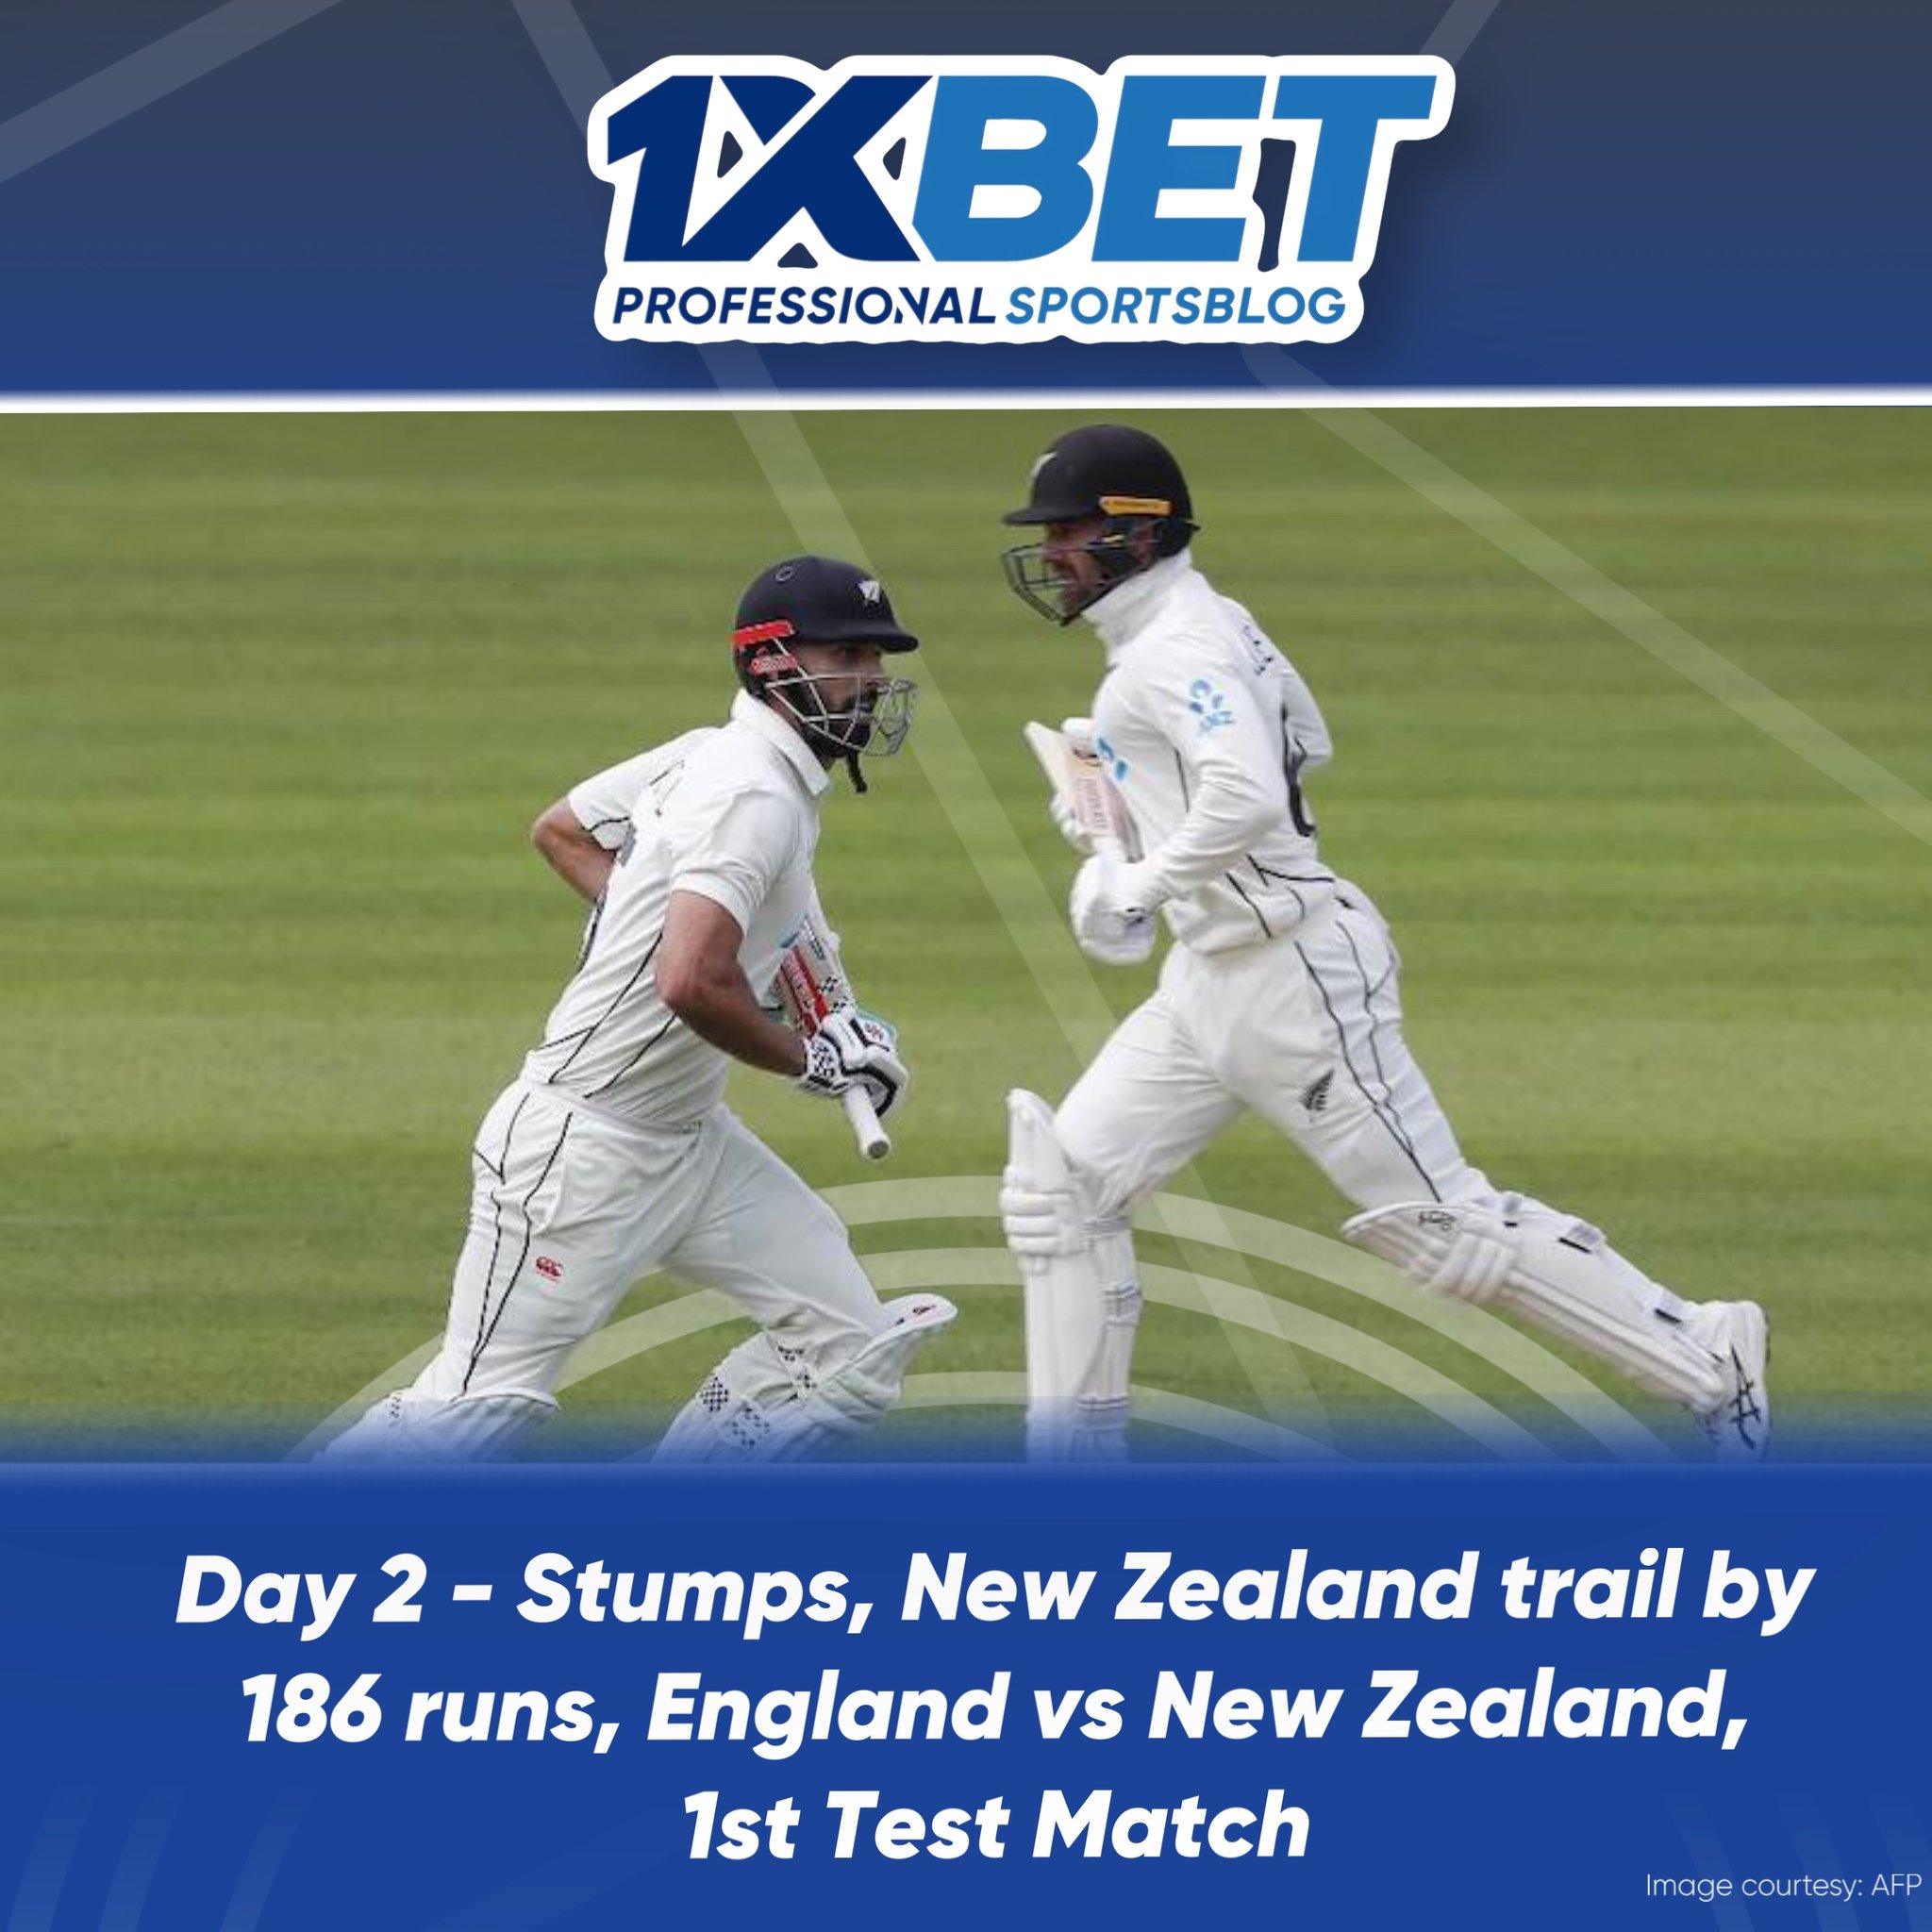 Day 2 - Stumps, New Zealand trail by 186 runs